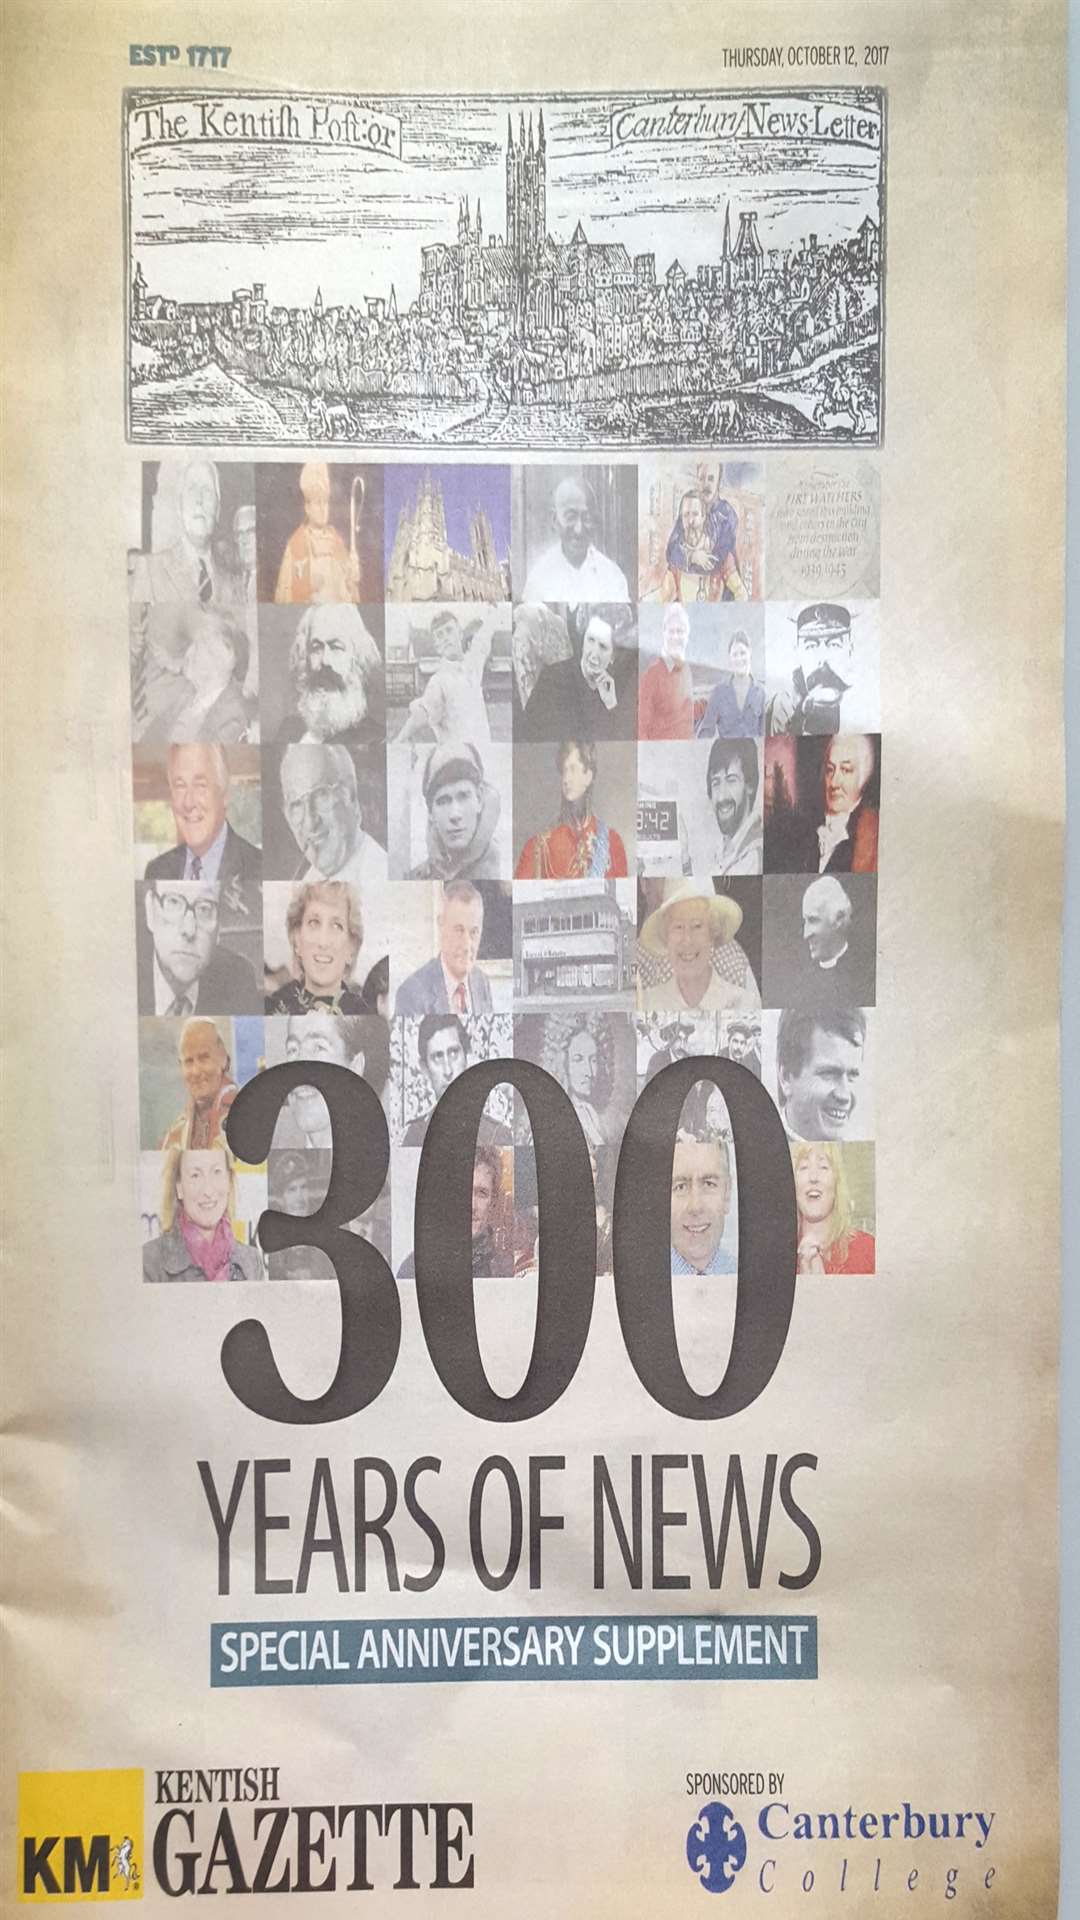 The 300th anniversary Kentish Gazette supplement